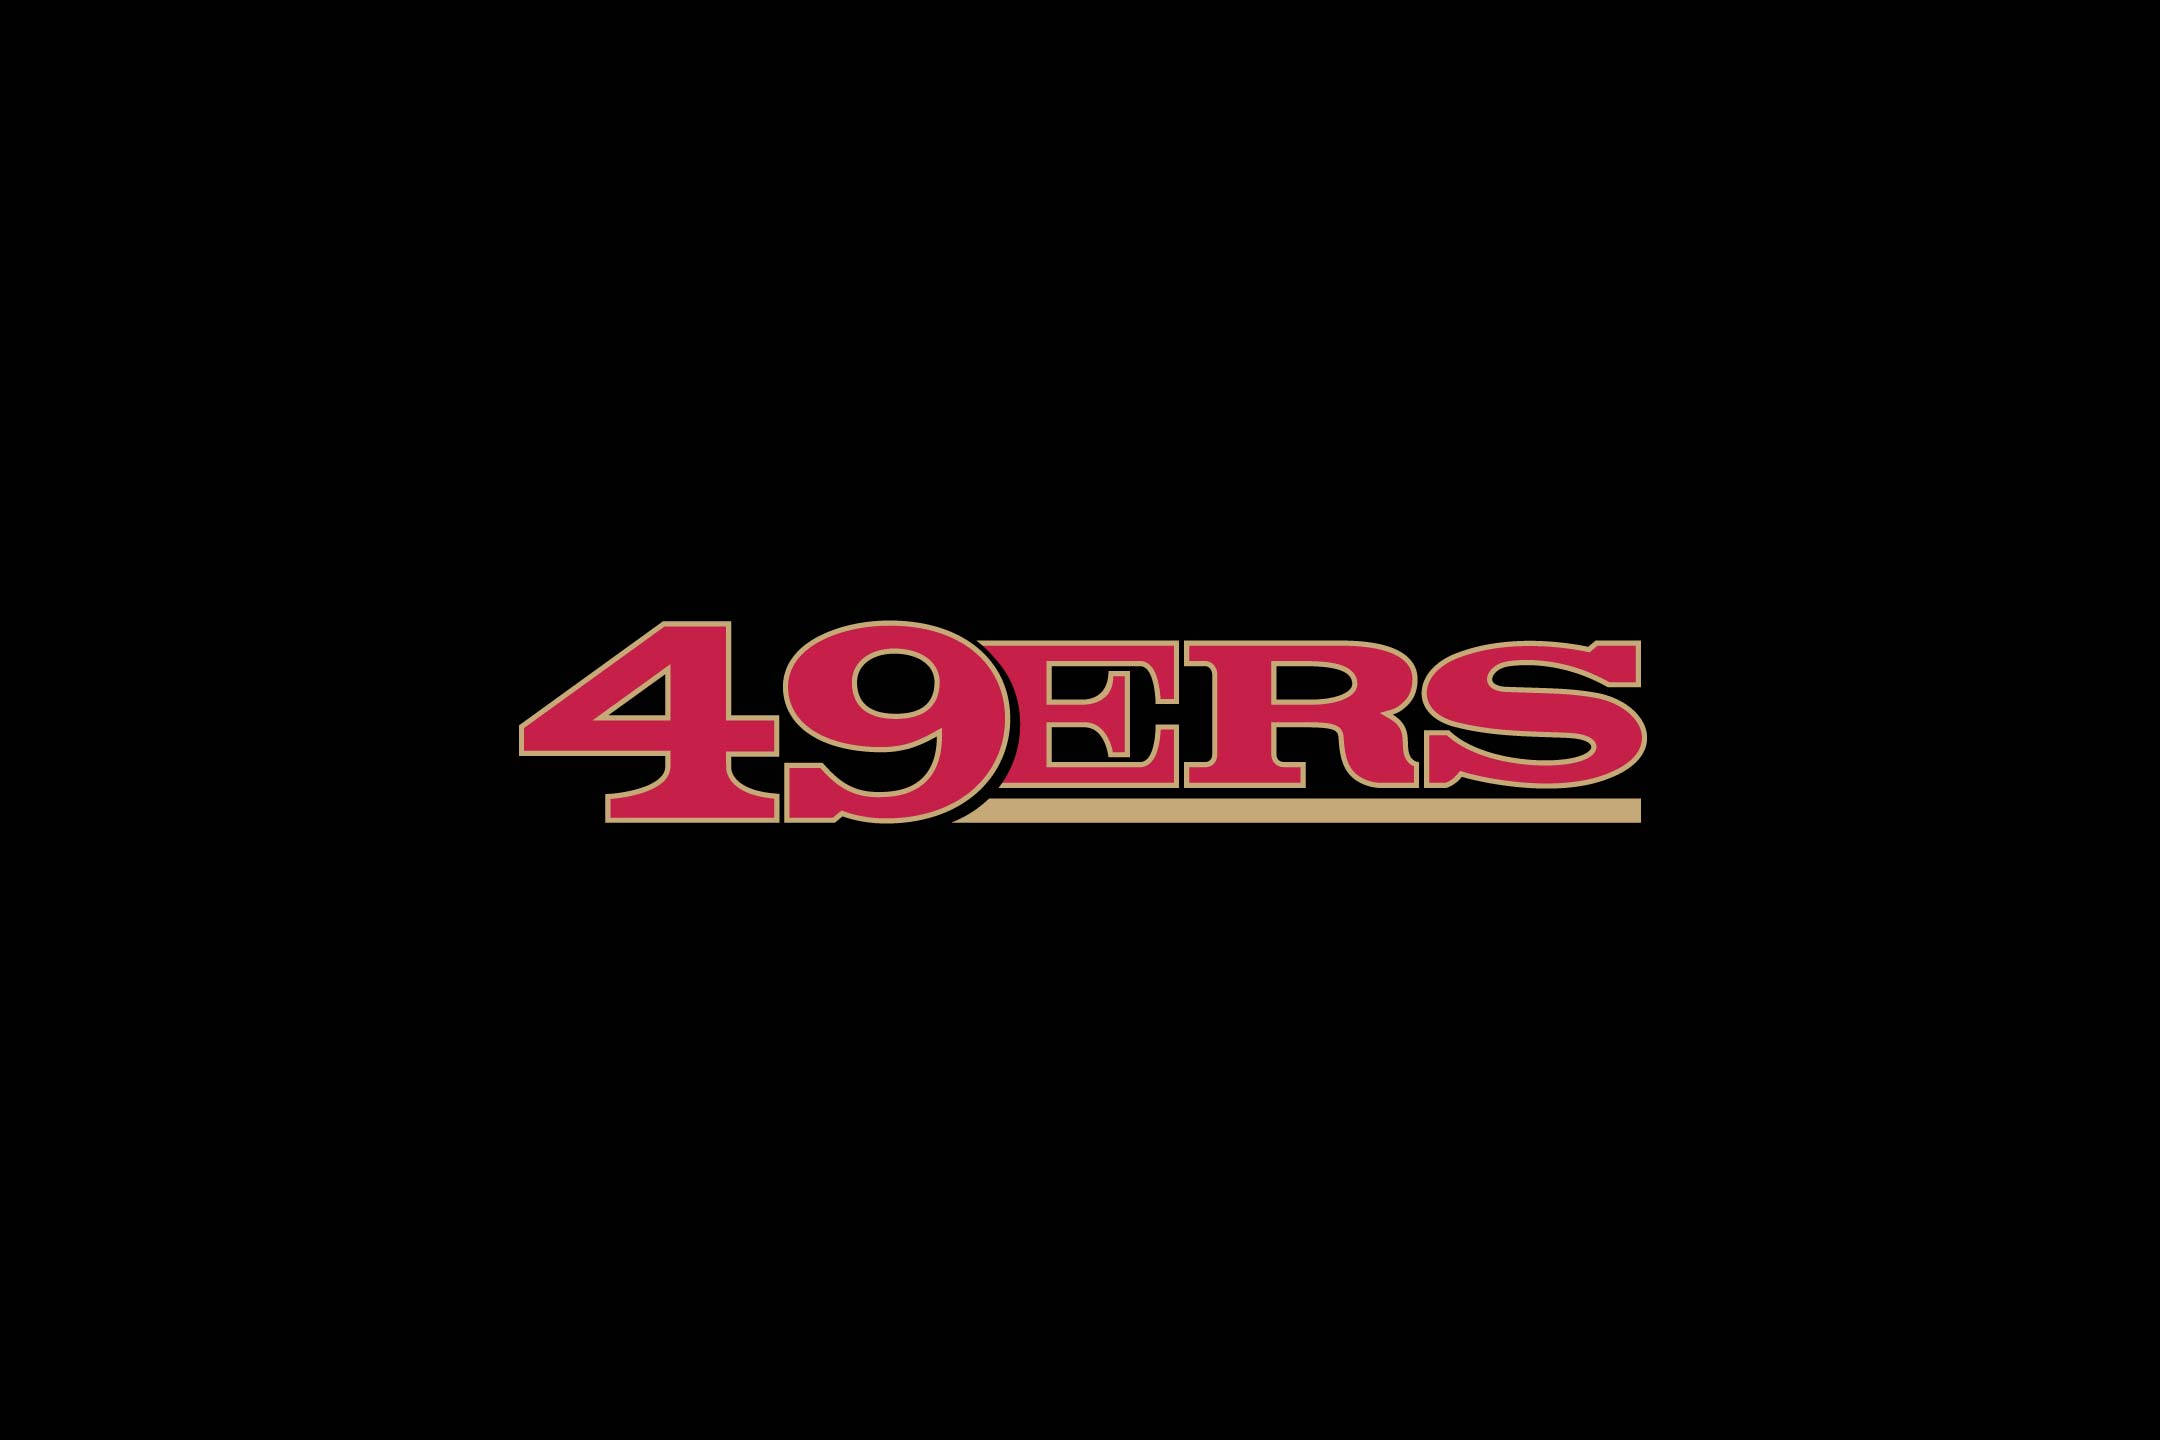 Download Minimalist 49ers Logo In Black Wallpaper 